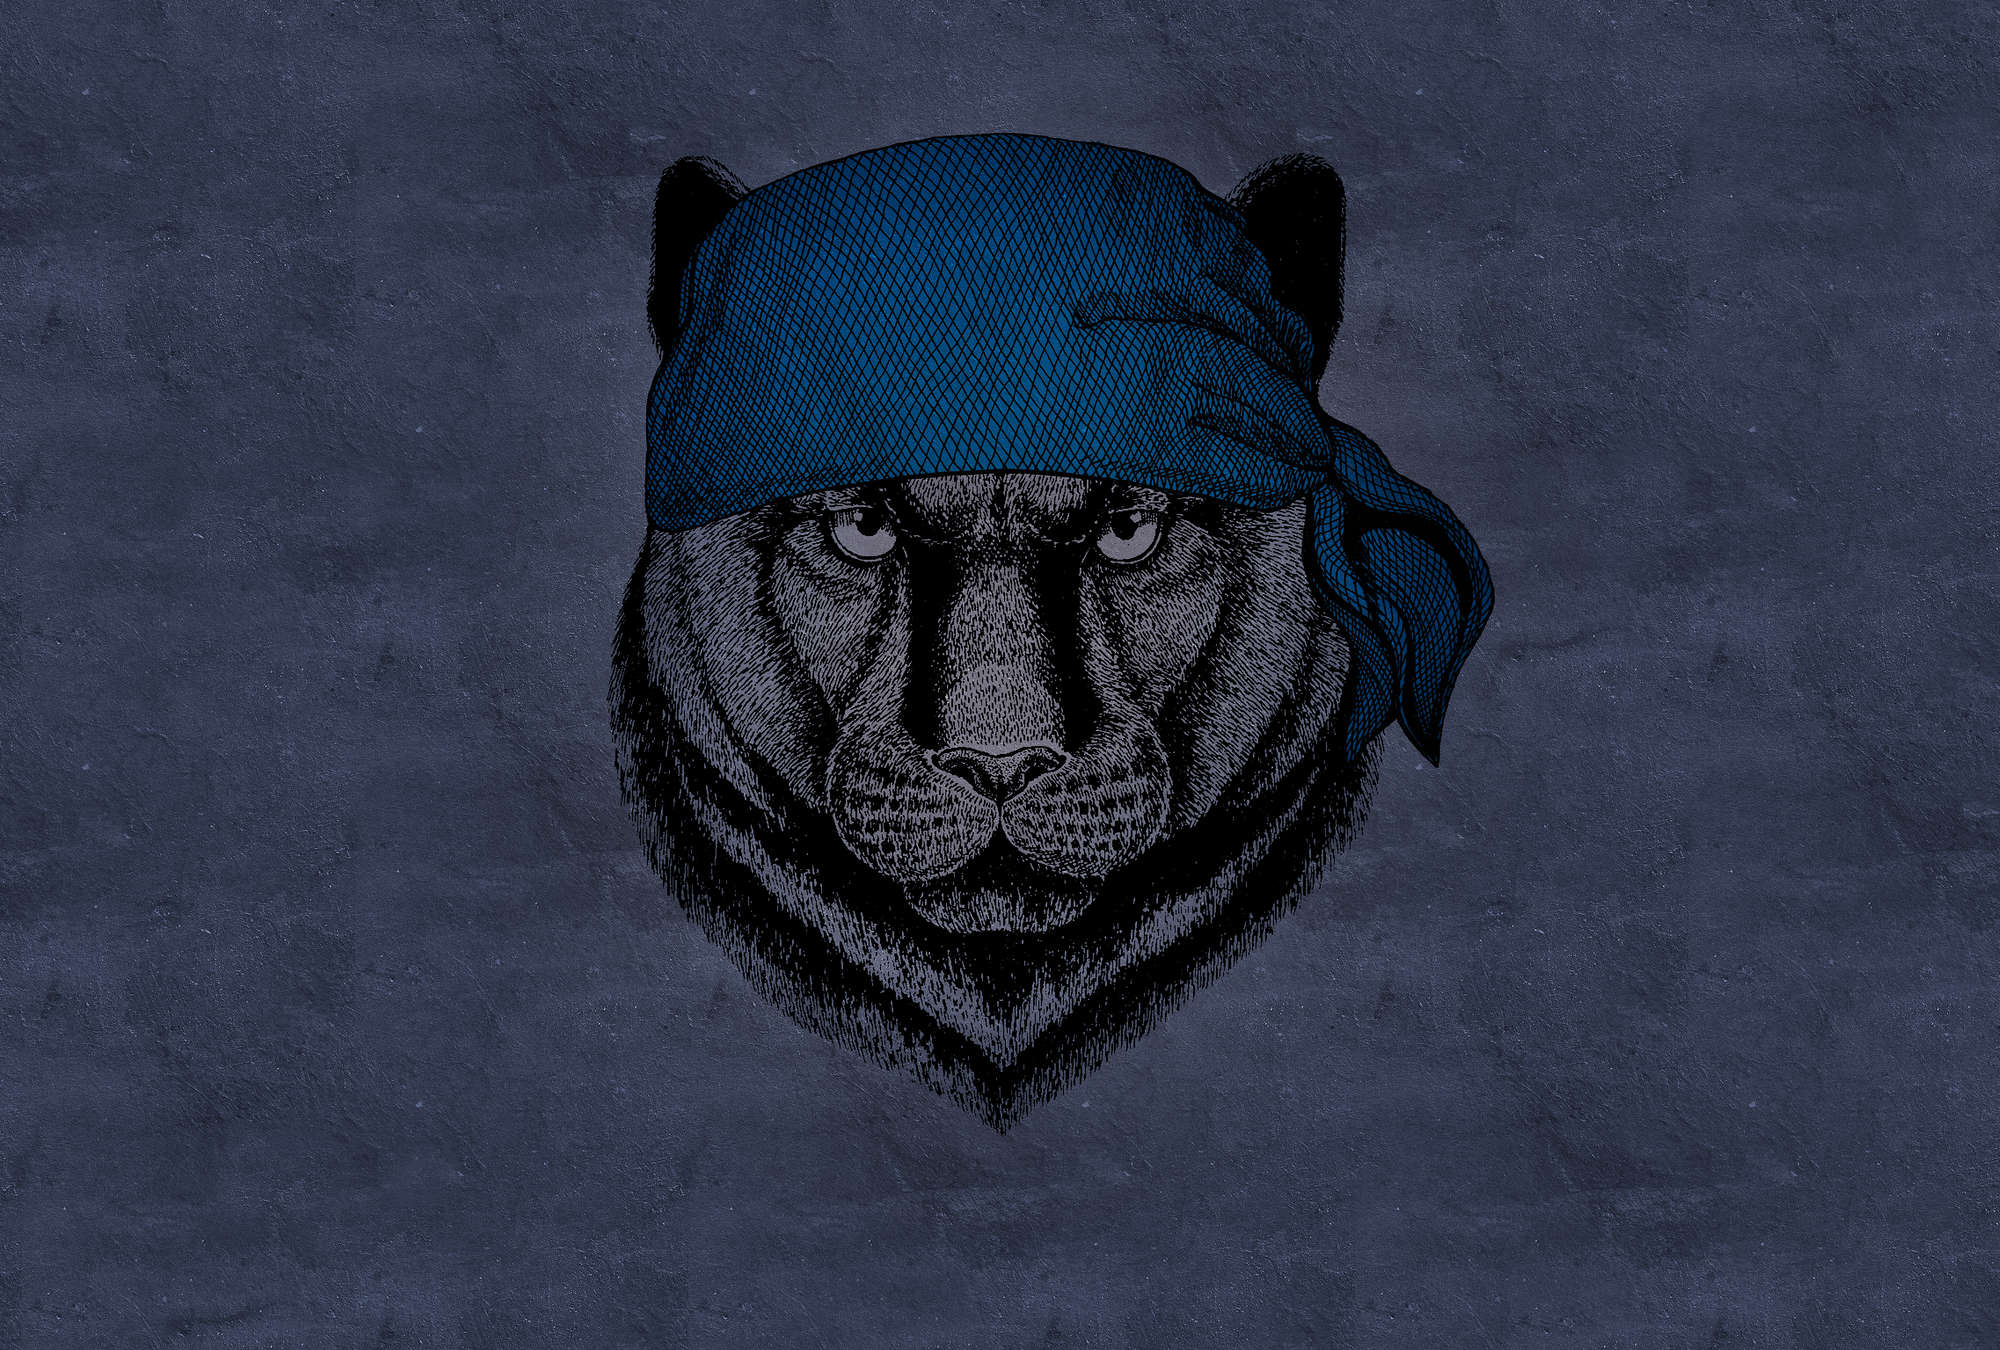             Fototapete Panther im Piraten-Look – Blau, Schwarz
        